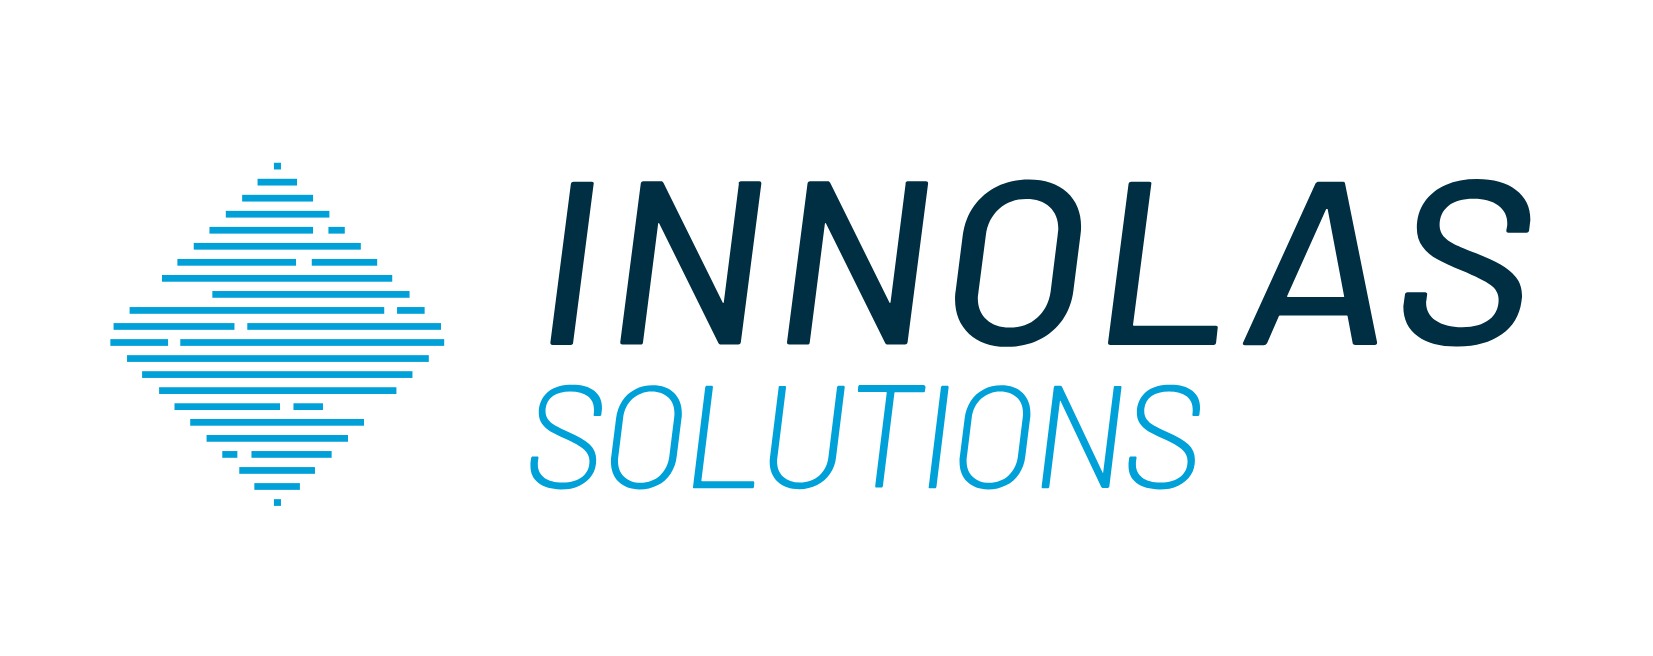 InnoLas Solutions GmbH